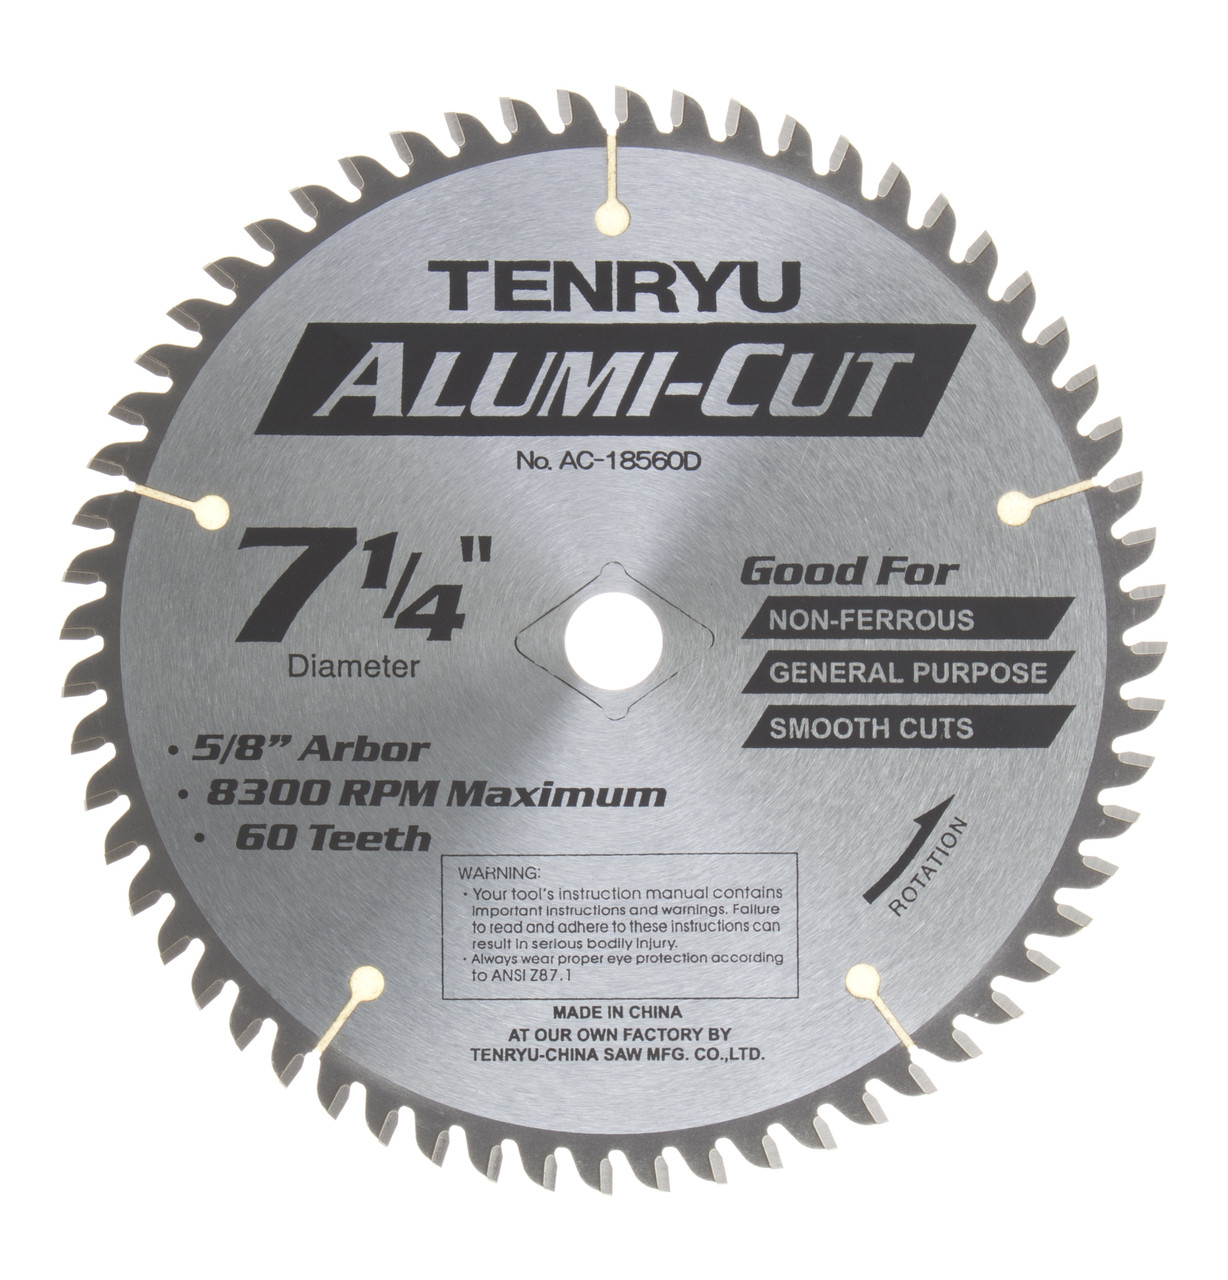 Alumi-Cut Saw Blade, 7-1/4